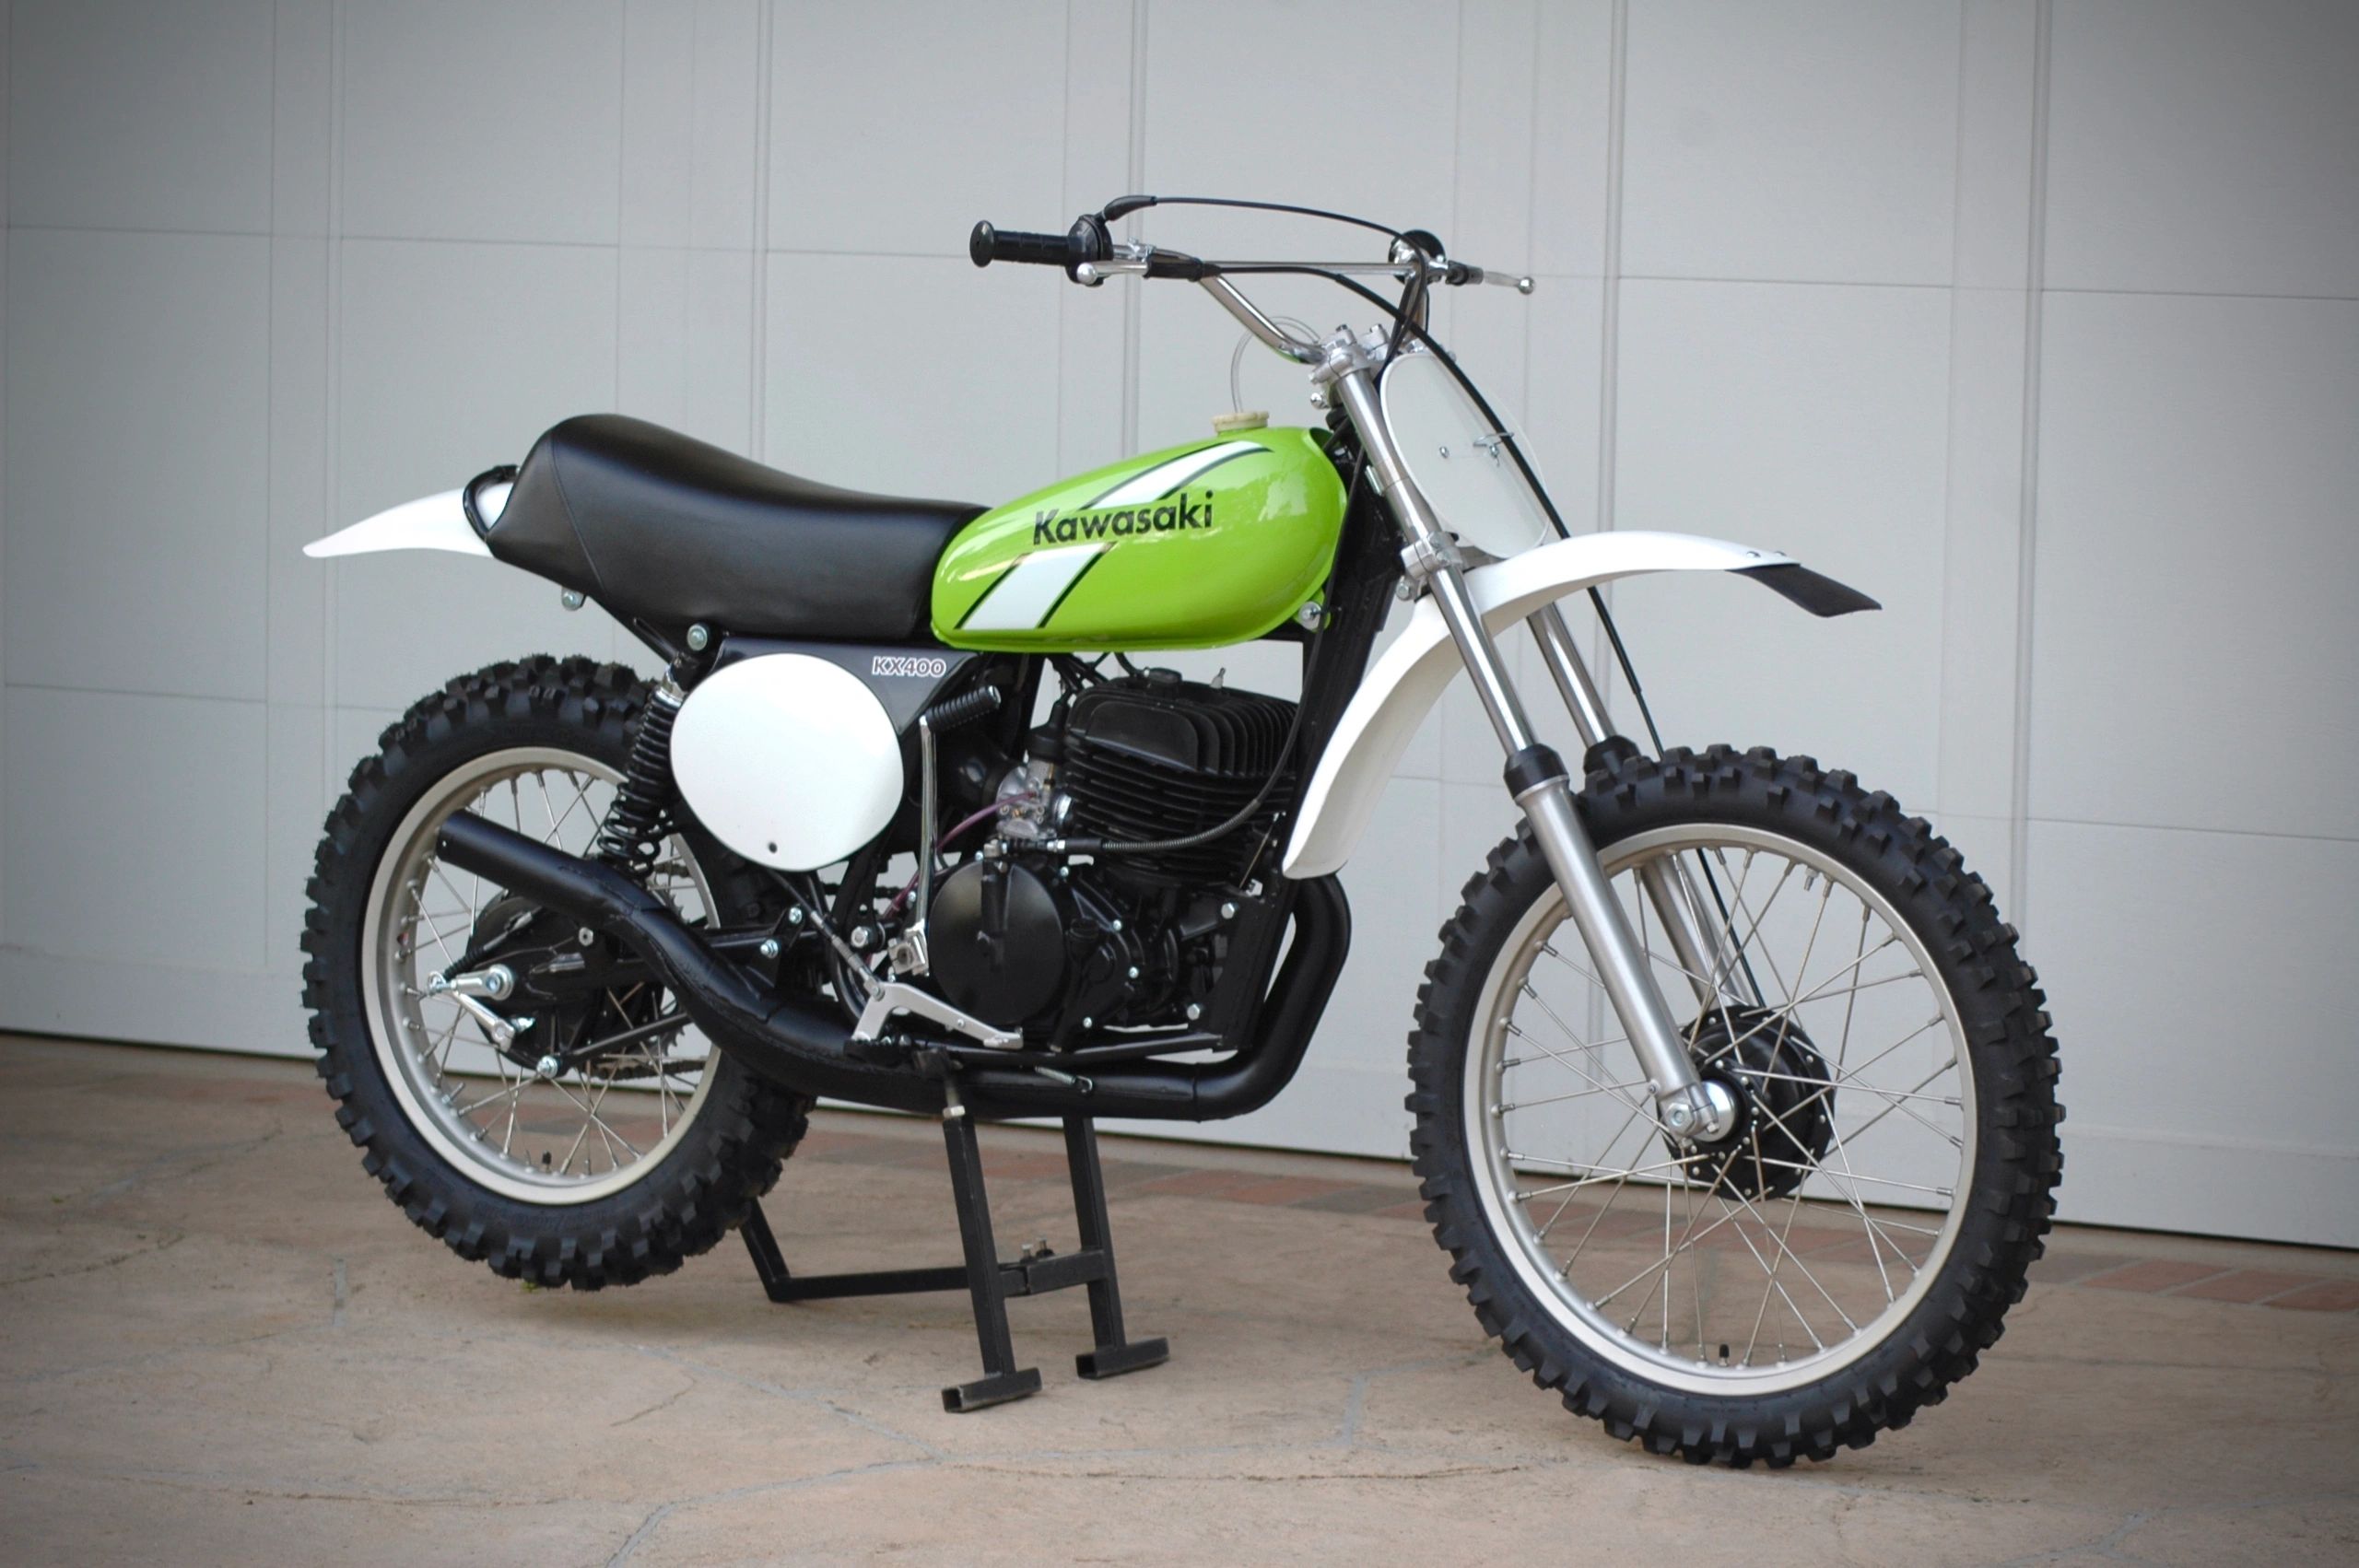 1975 Kawasaki KX400 restored vintage motocross bike